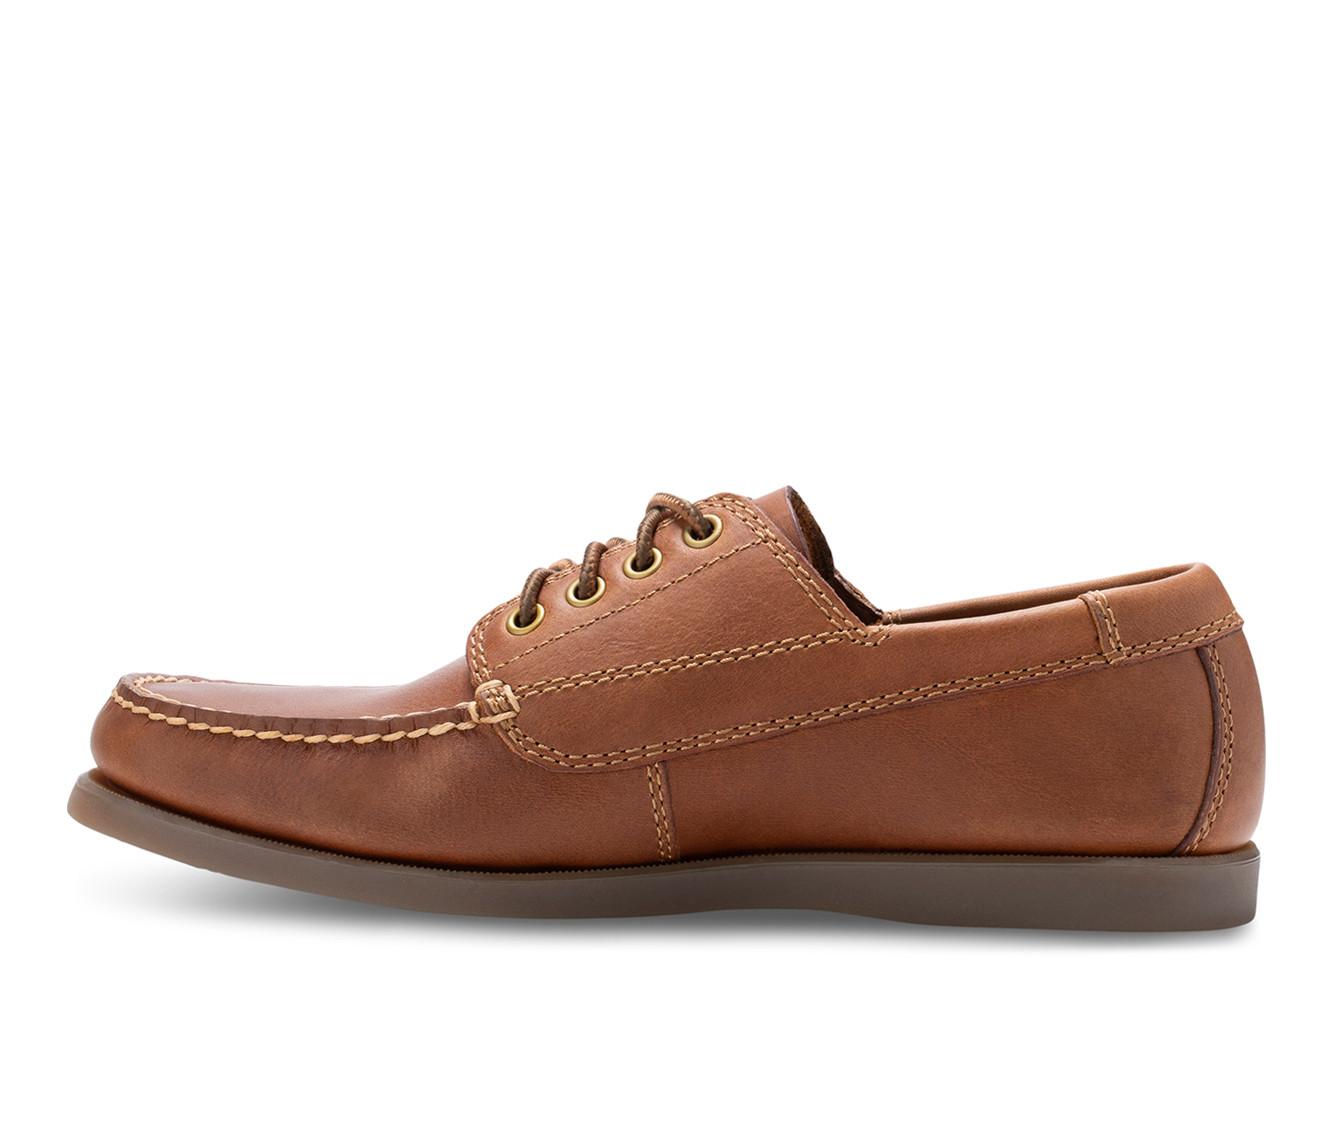 Men's Eastland Men's Falmouth Boat Shoes